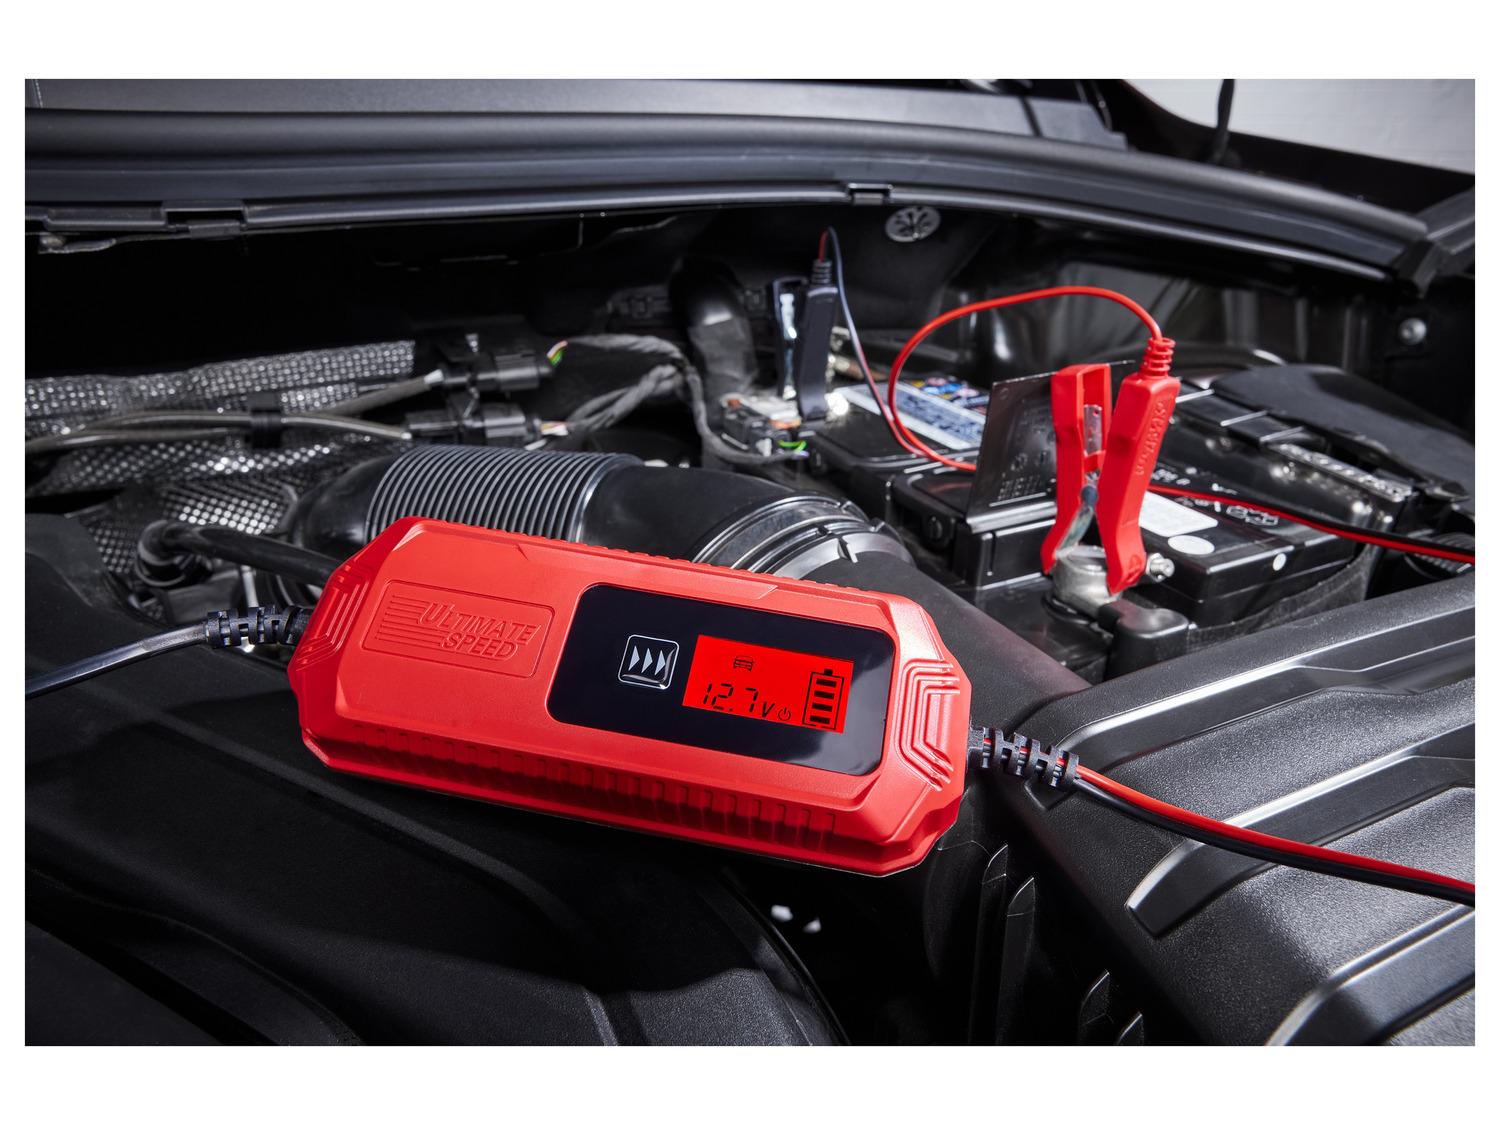 ULTIMATE SPEED® Chargeur de batterie véhicules motoris…